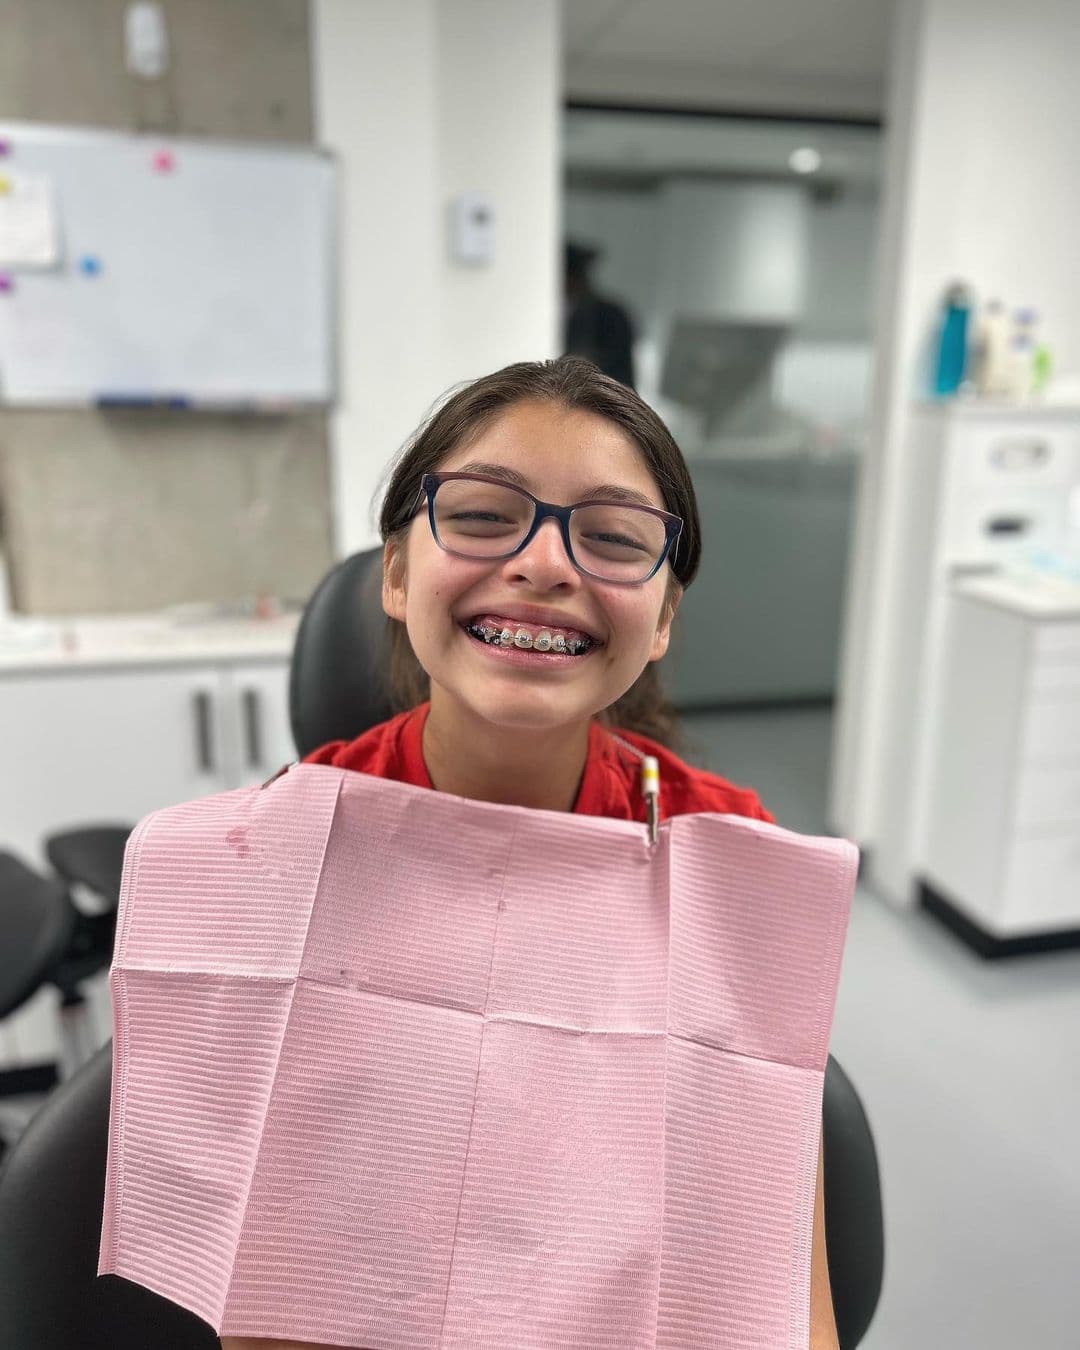 Norah jeune patiente Orthoville souriante